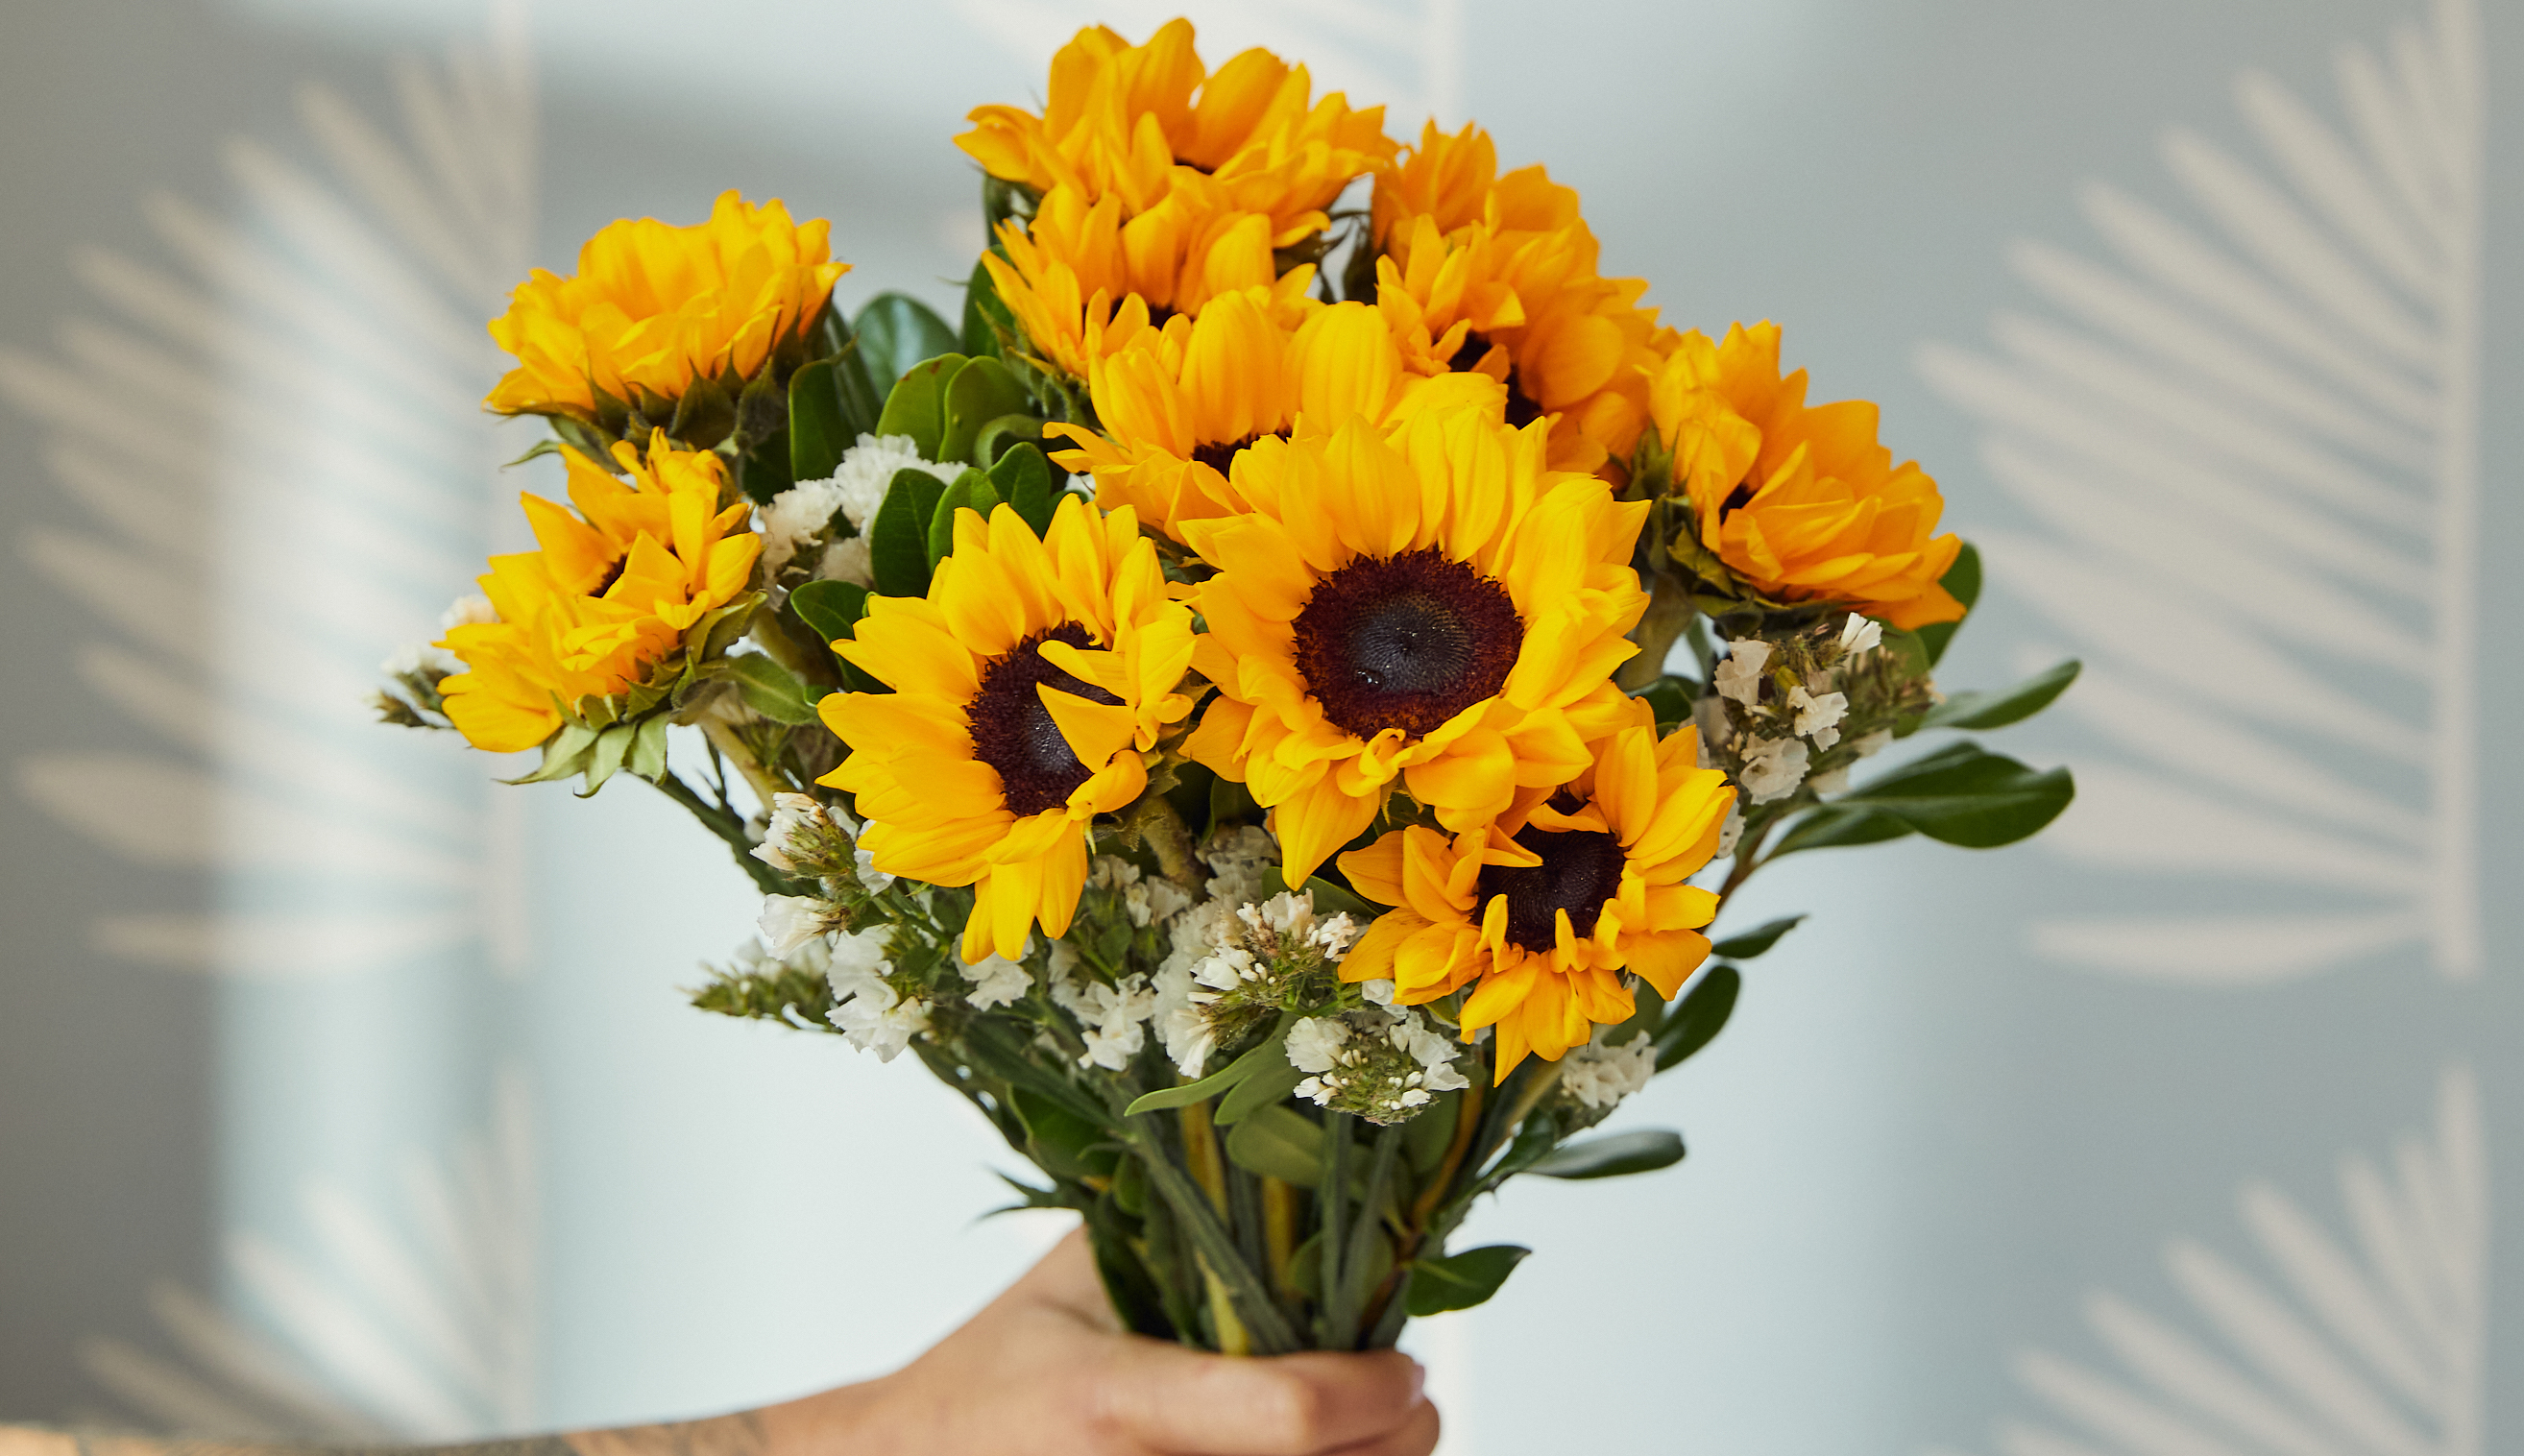 Hand holding sunflower bouquet